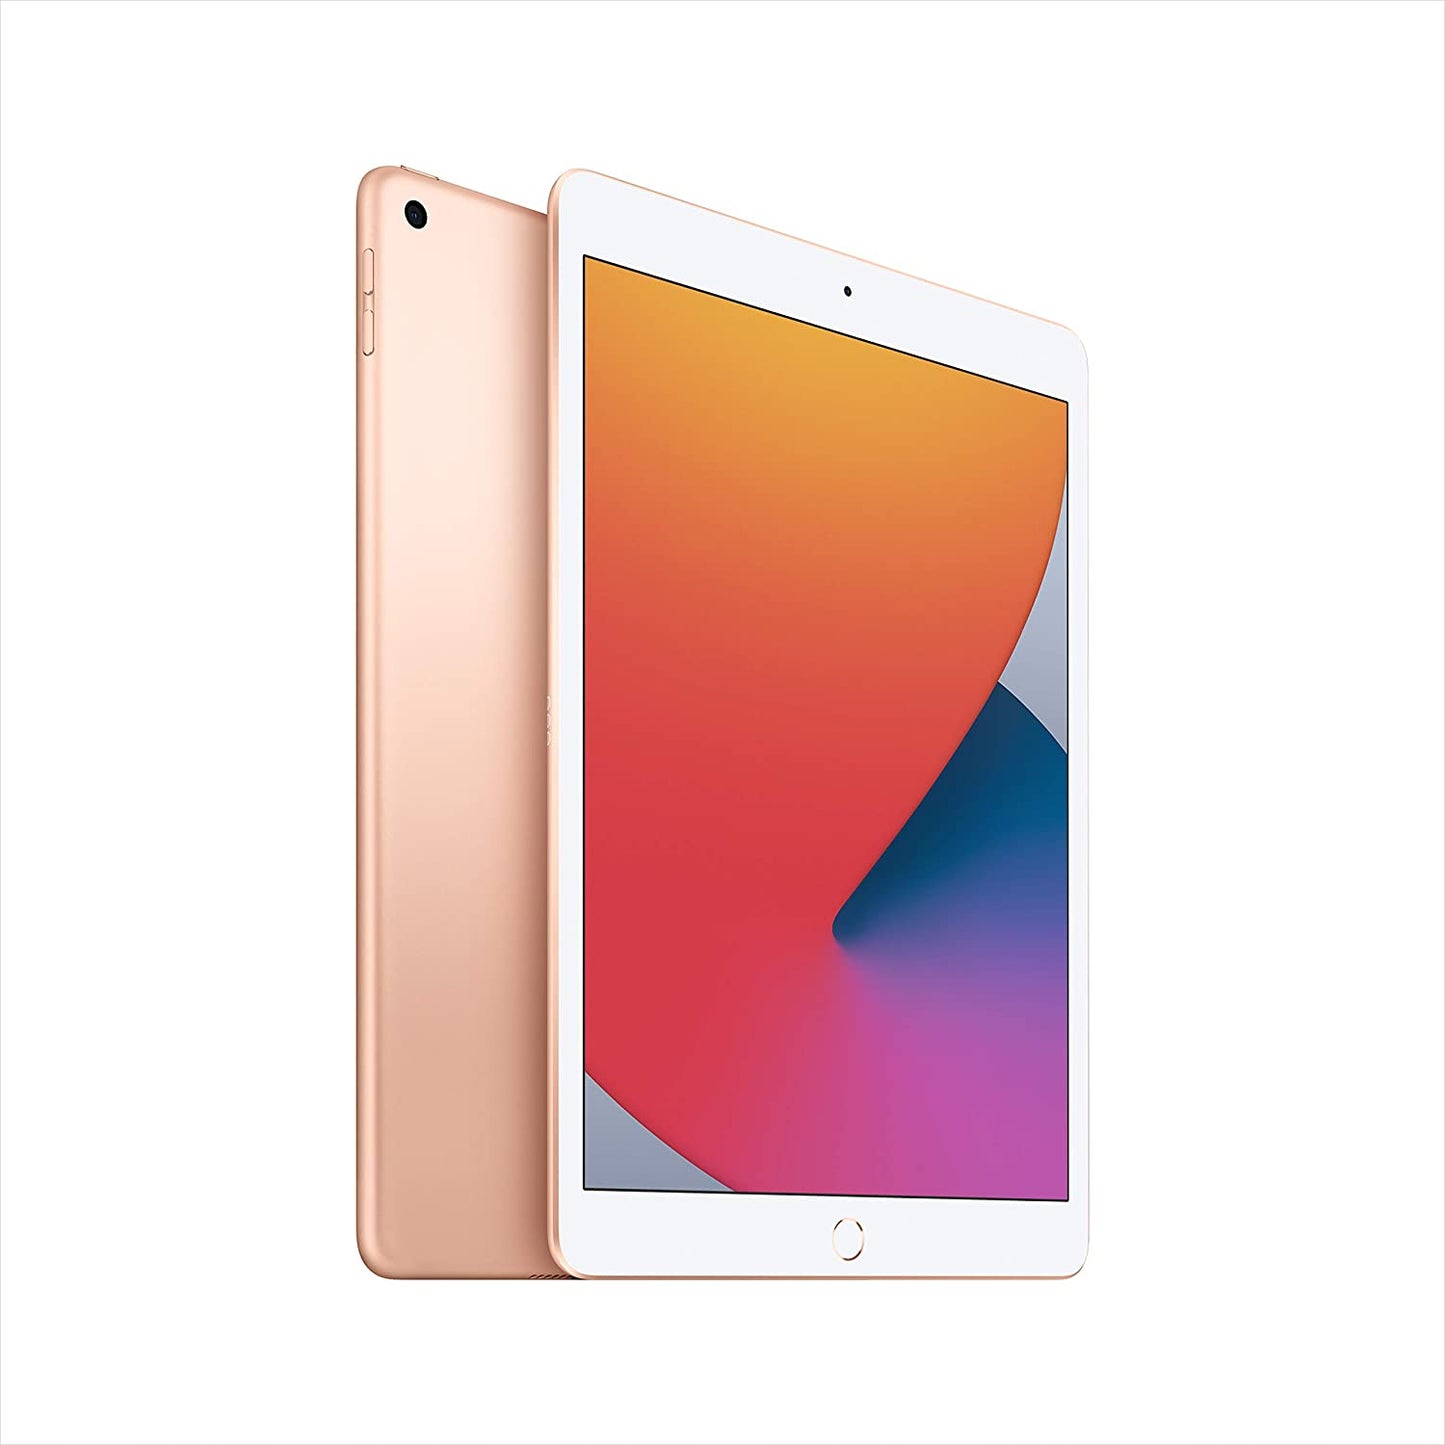 Apple 10.2-inch iPad Wi-Fi 32GB - Gold (Fall 2020) 8th Gen - Side View